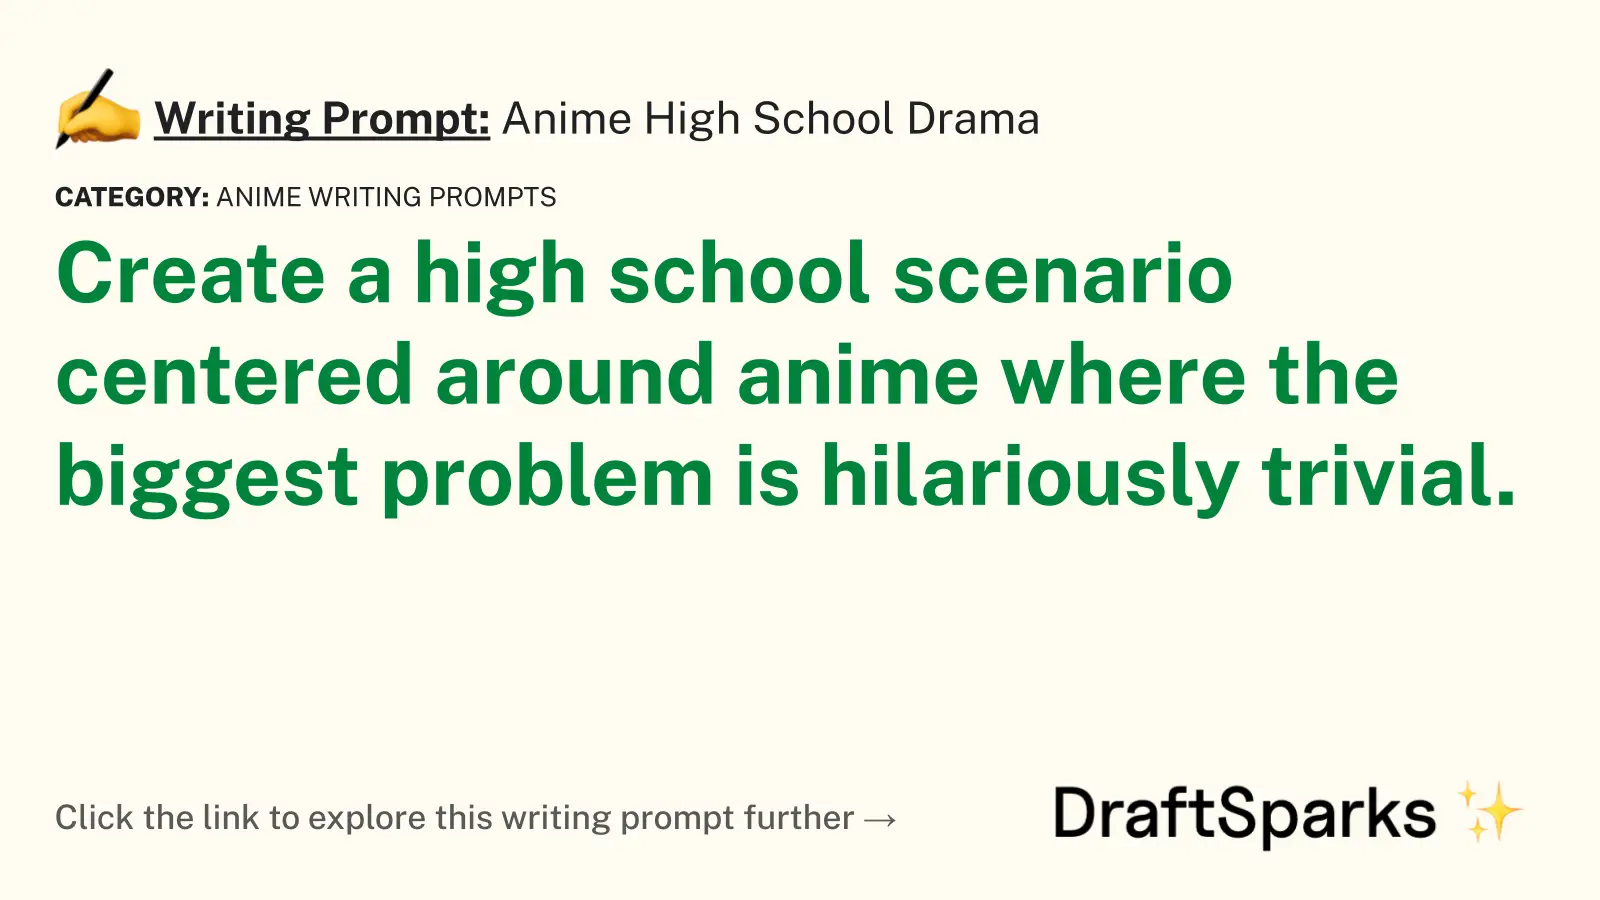 Anime High School Drama